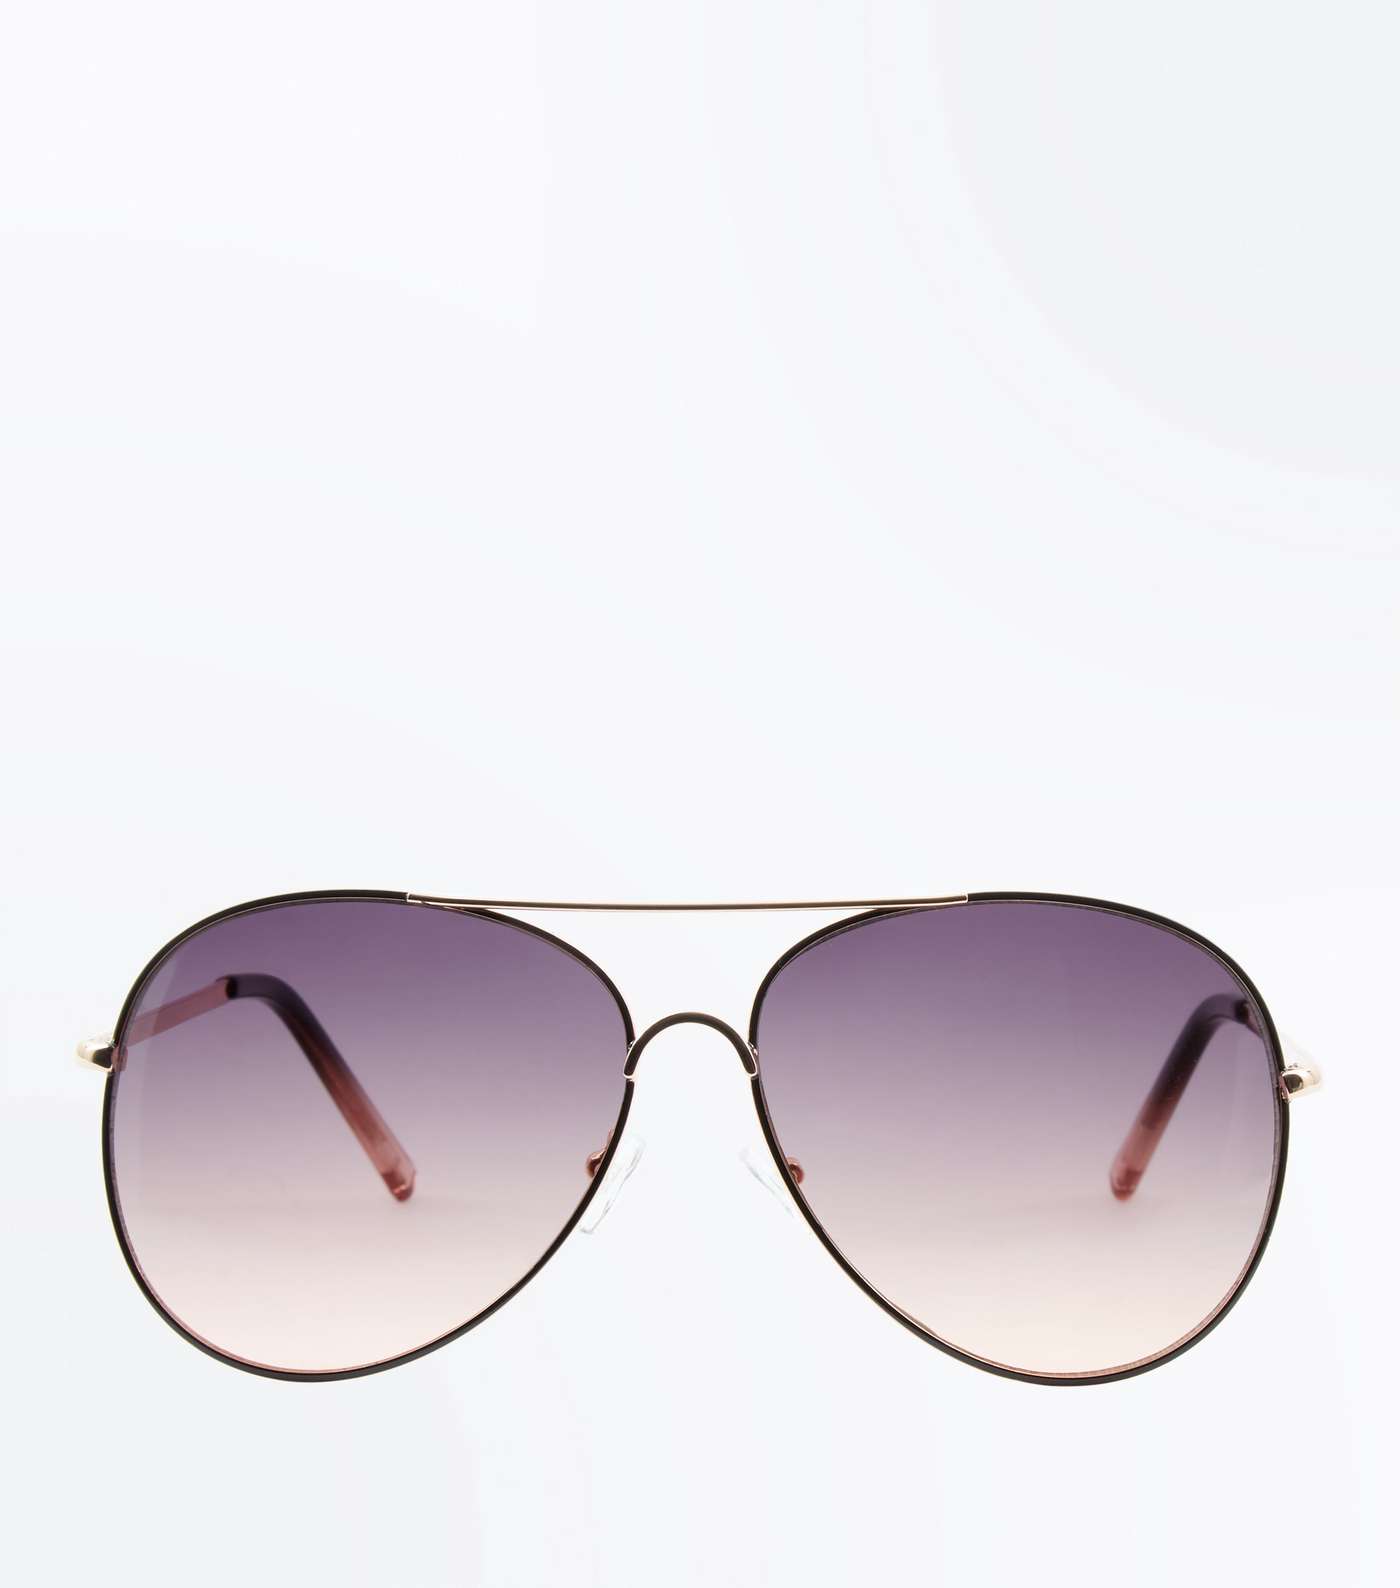 Black Ombré Aviator Style Sunglasses Image 3